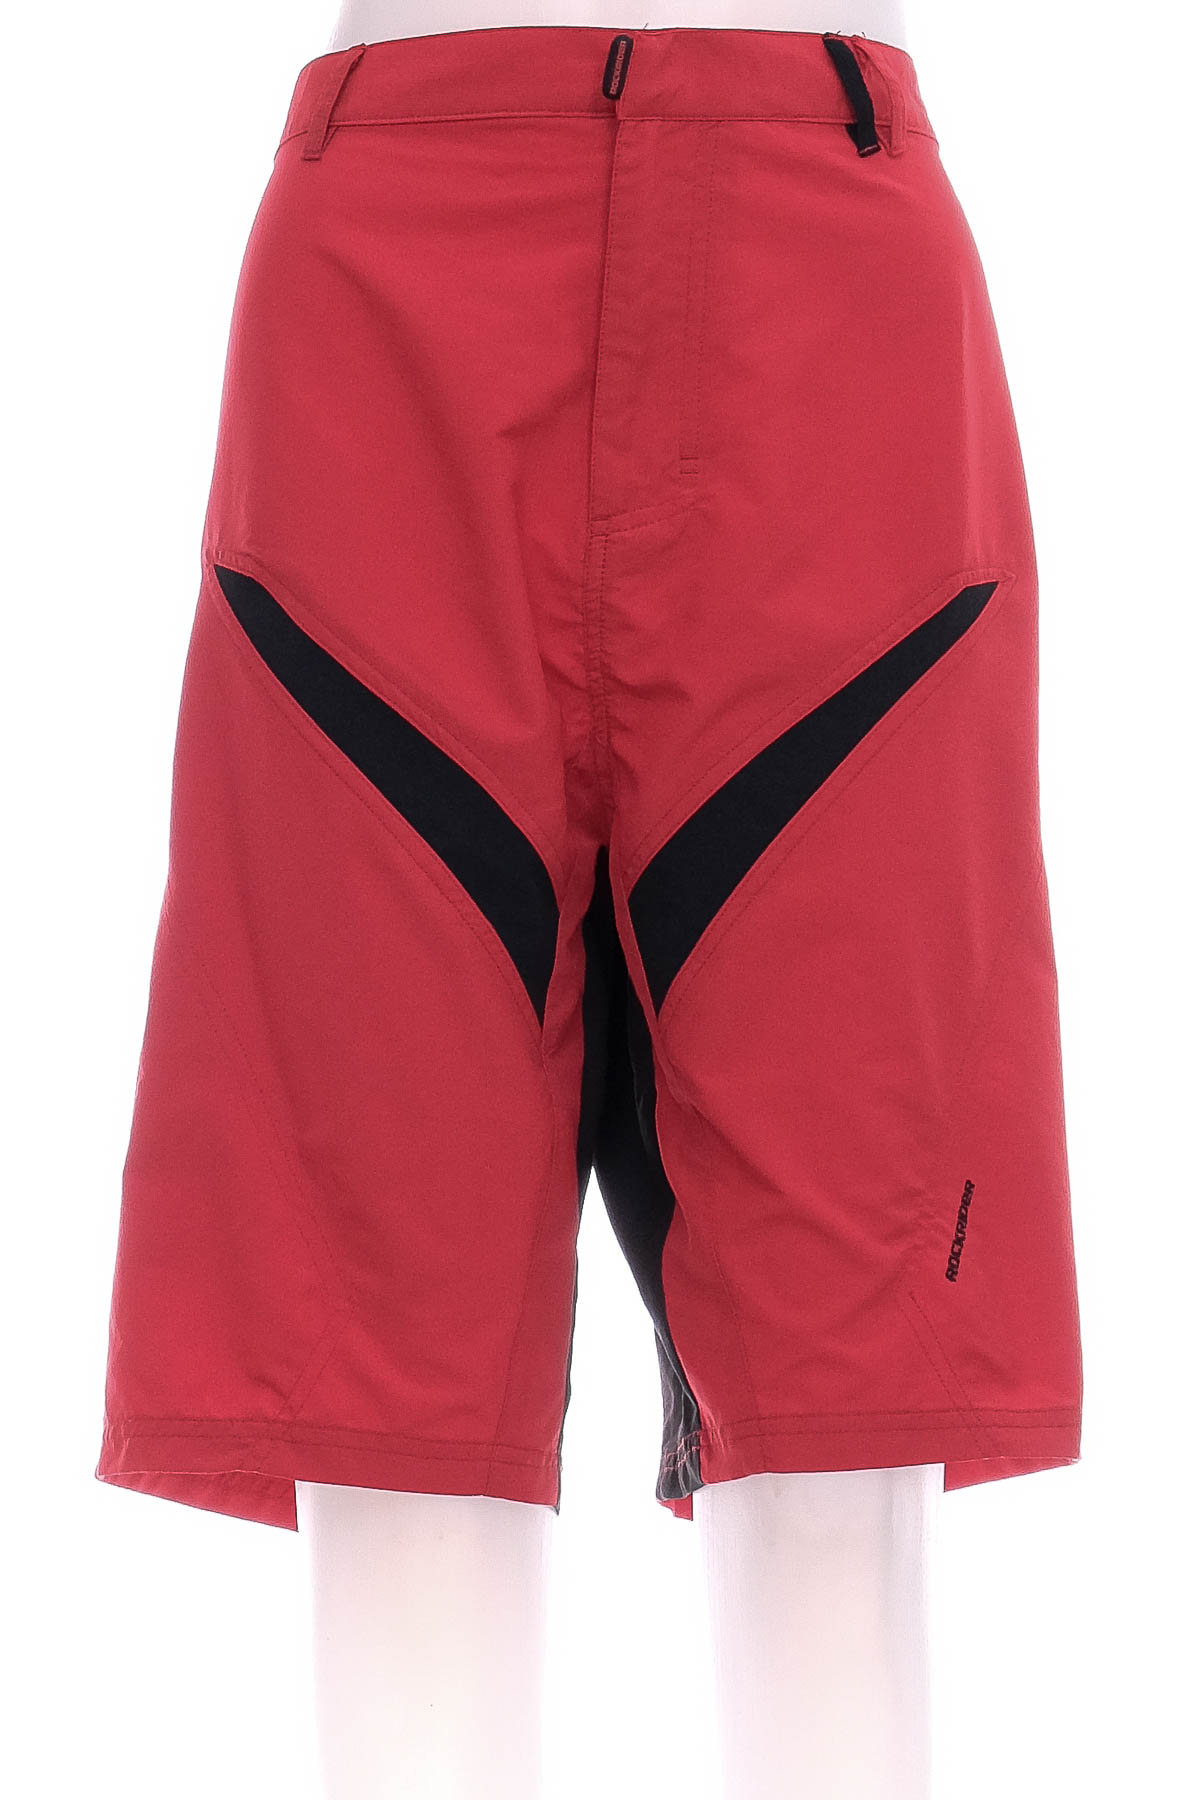 Men's shorts - Oxylane - 0